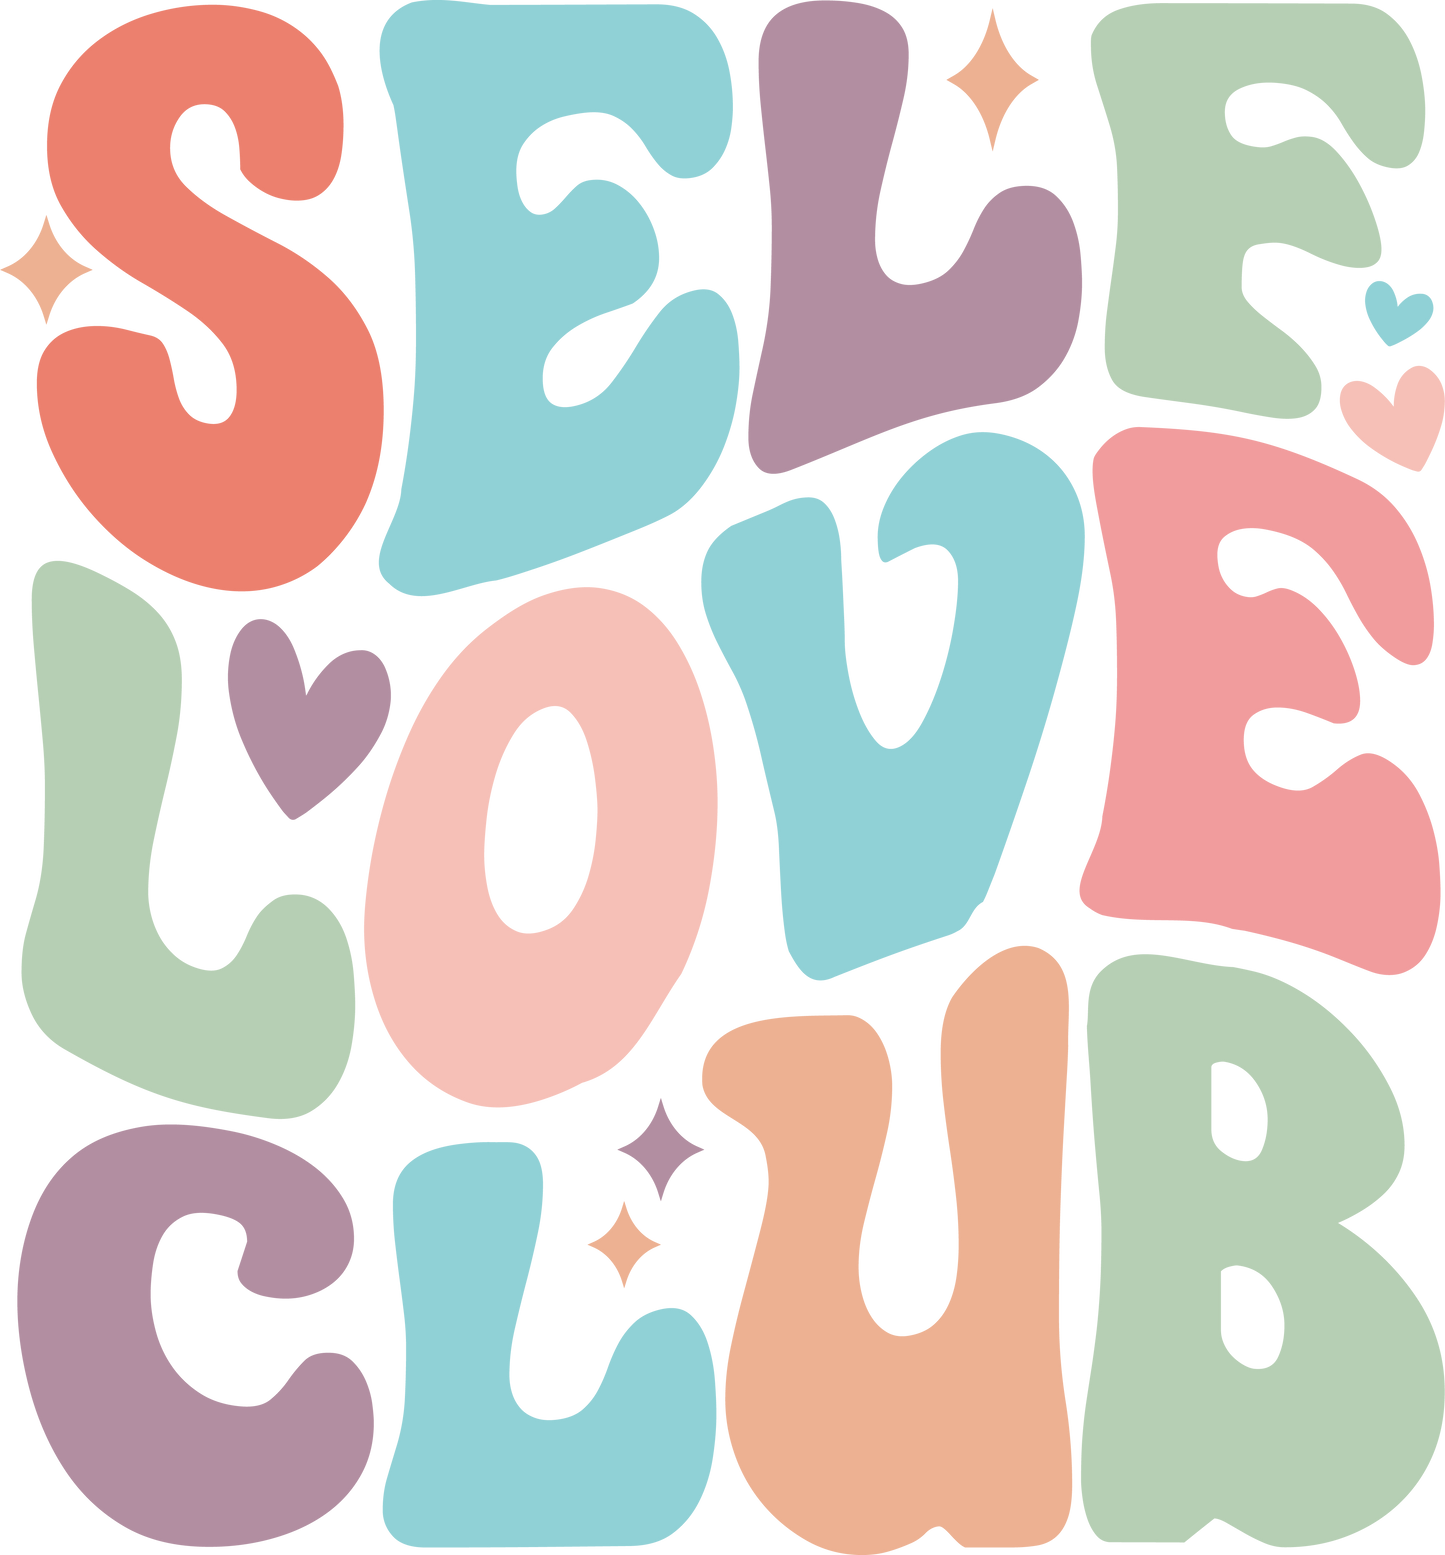 Self Love Club Transfers